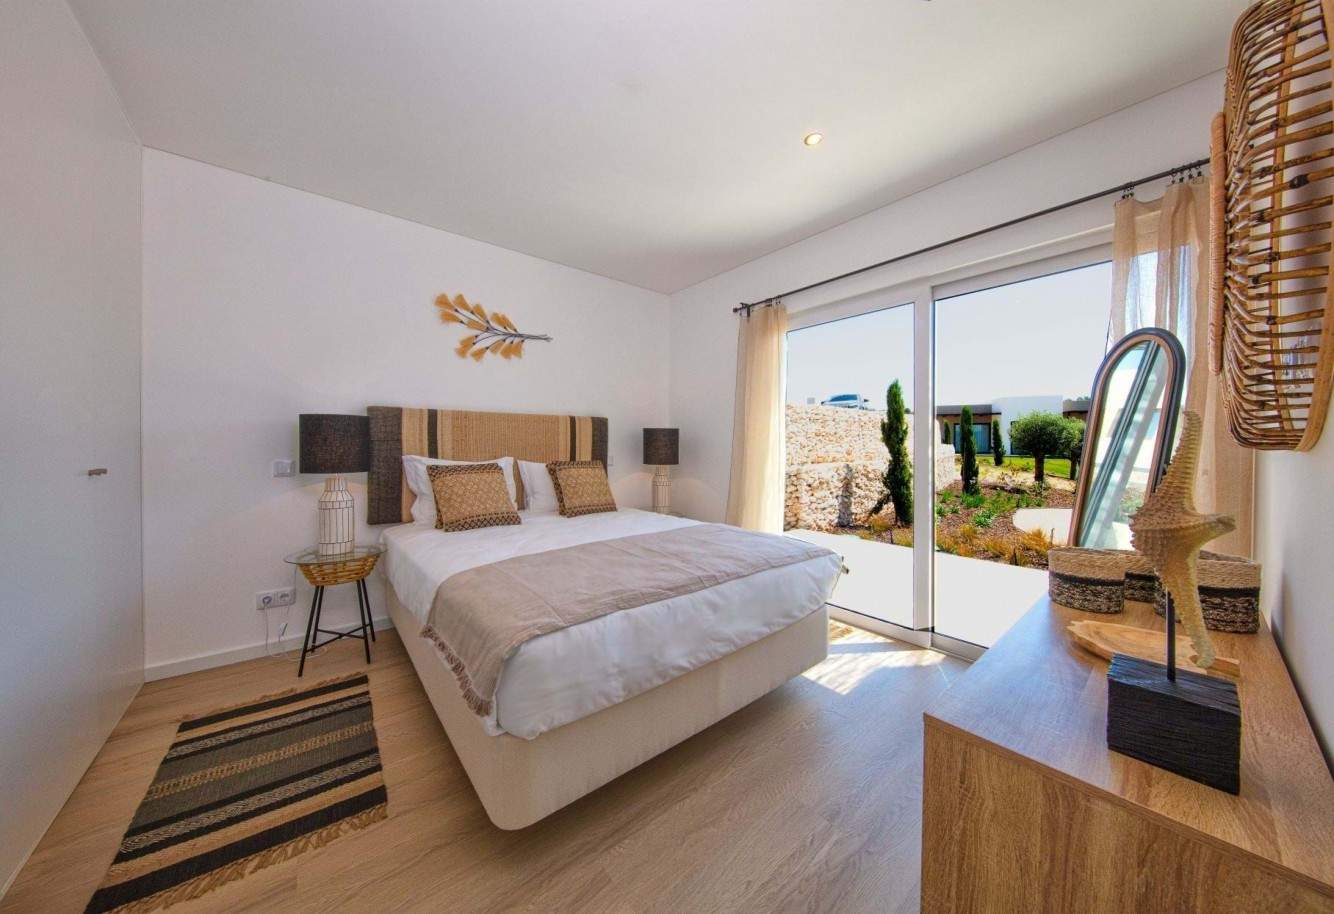 2+1 bedroom villa in resort, for sale in Carvoeiro, Algarve_206840